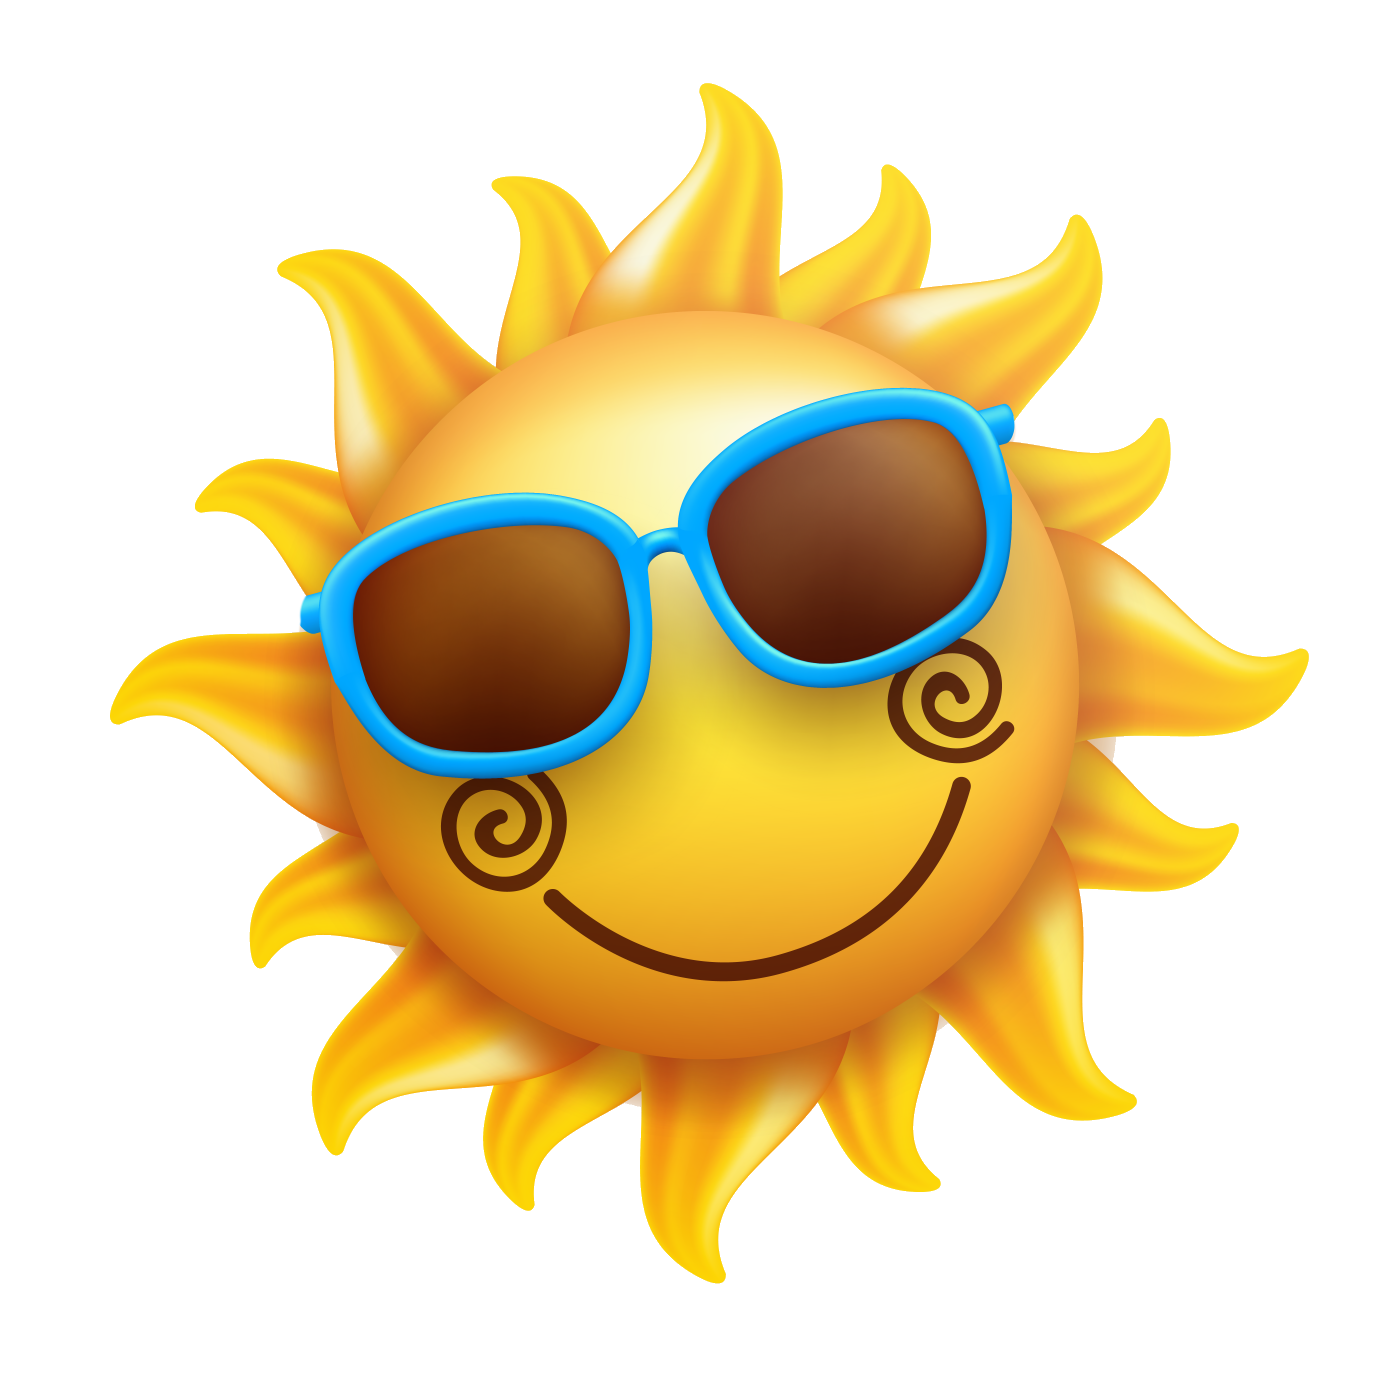 Sun Photography Sunglasses Illustration Free HQ Image Clipart